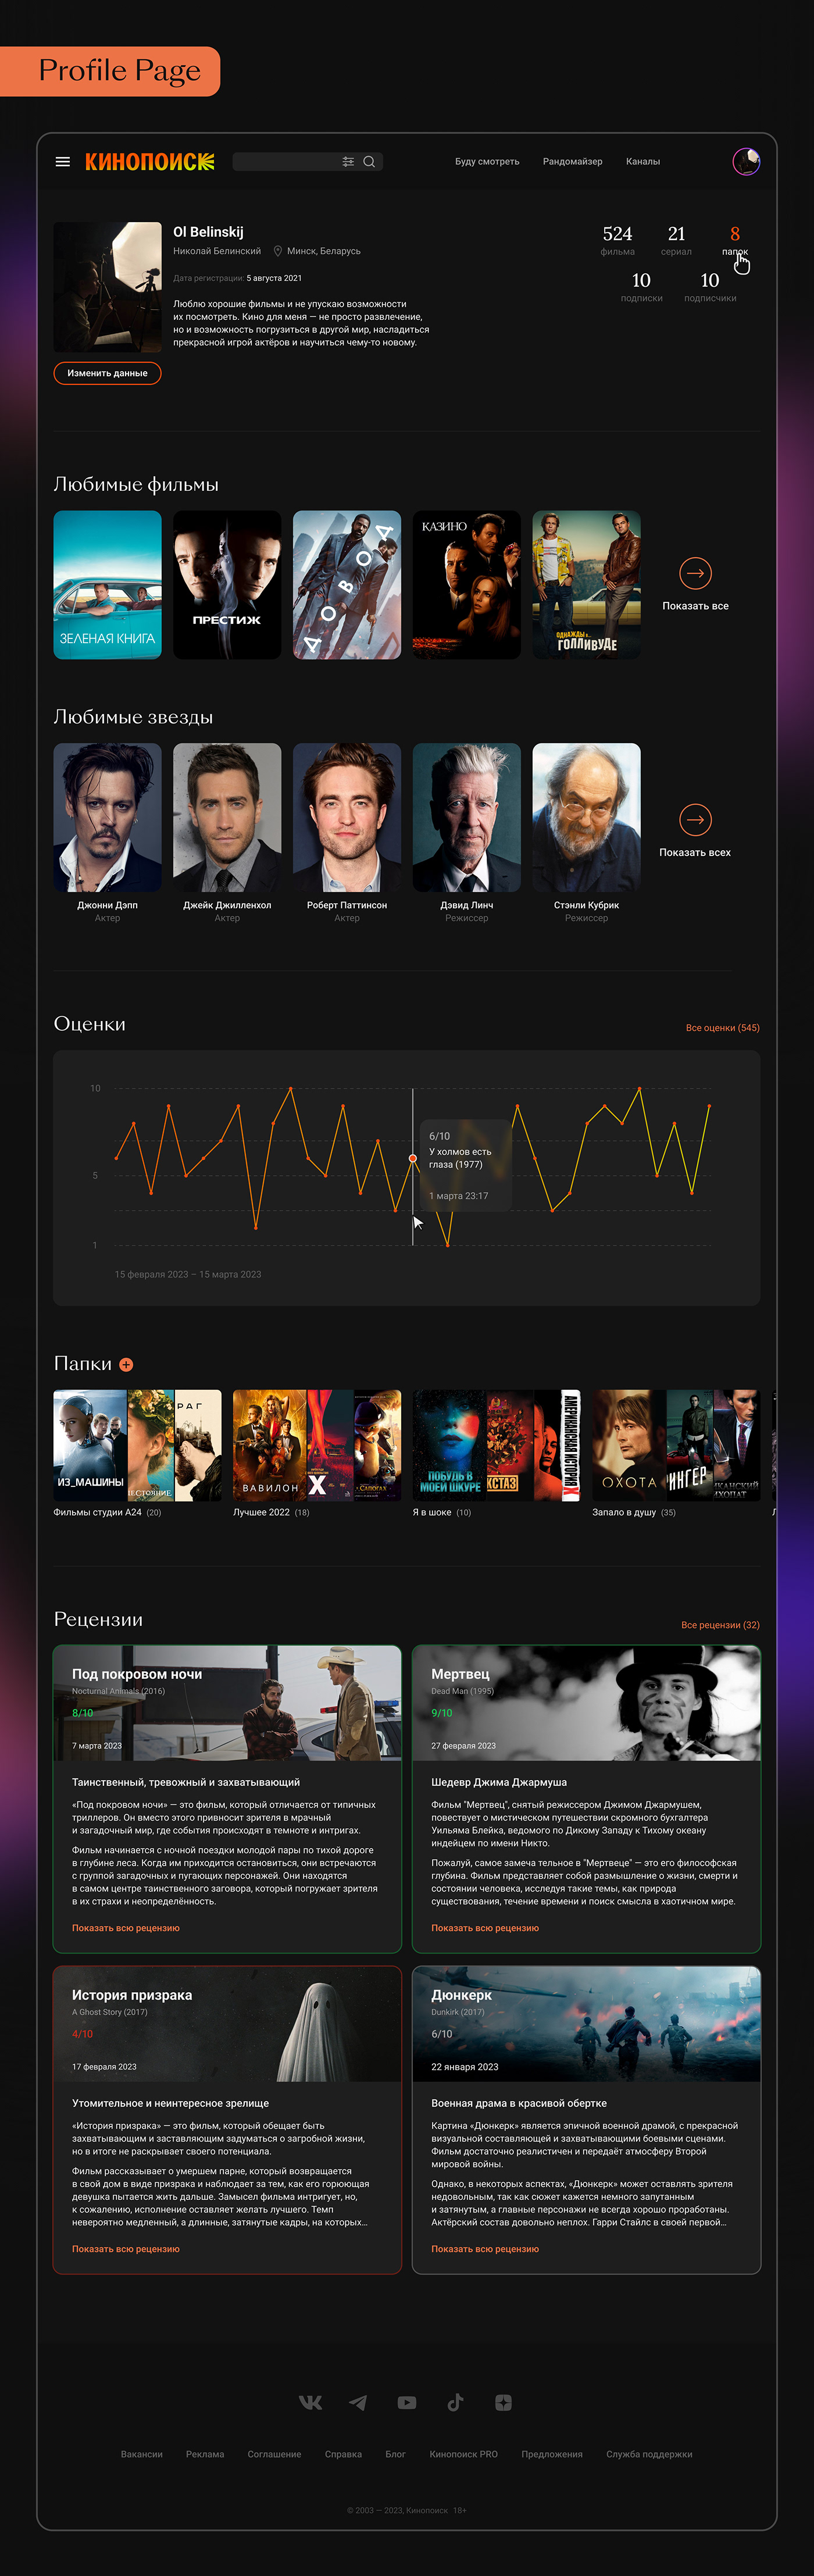 films kinopoisk Movies online cinema profile redesign cinematography tv series ux/ui yandex